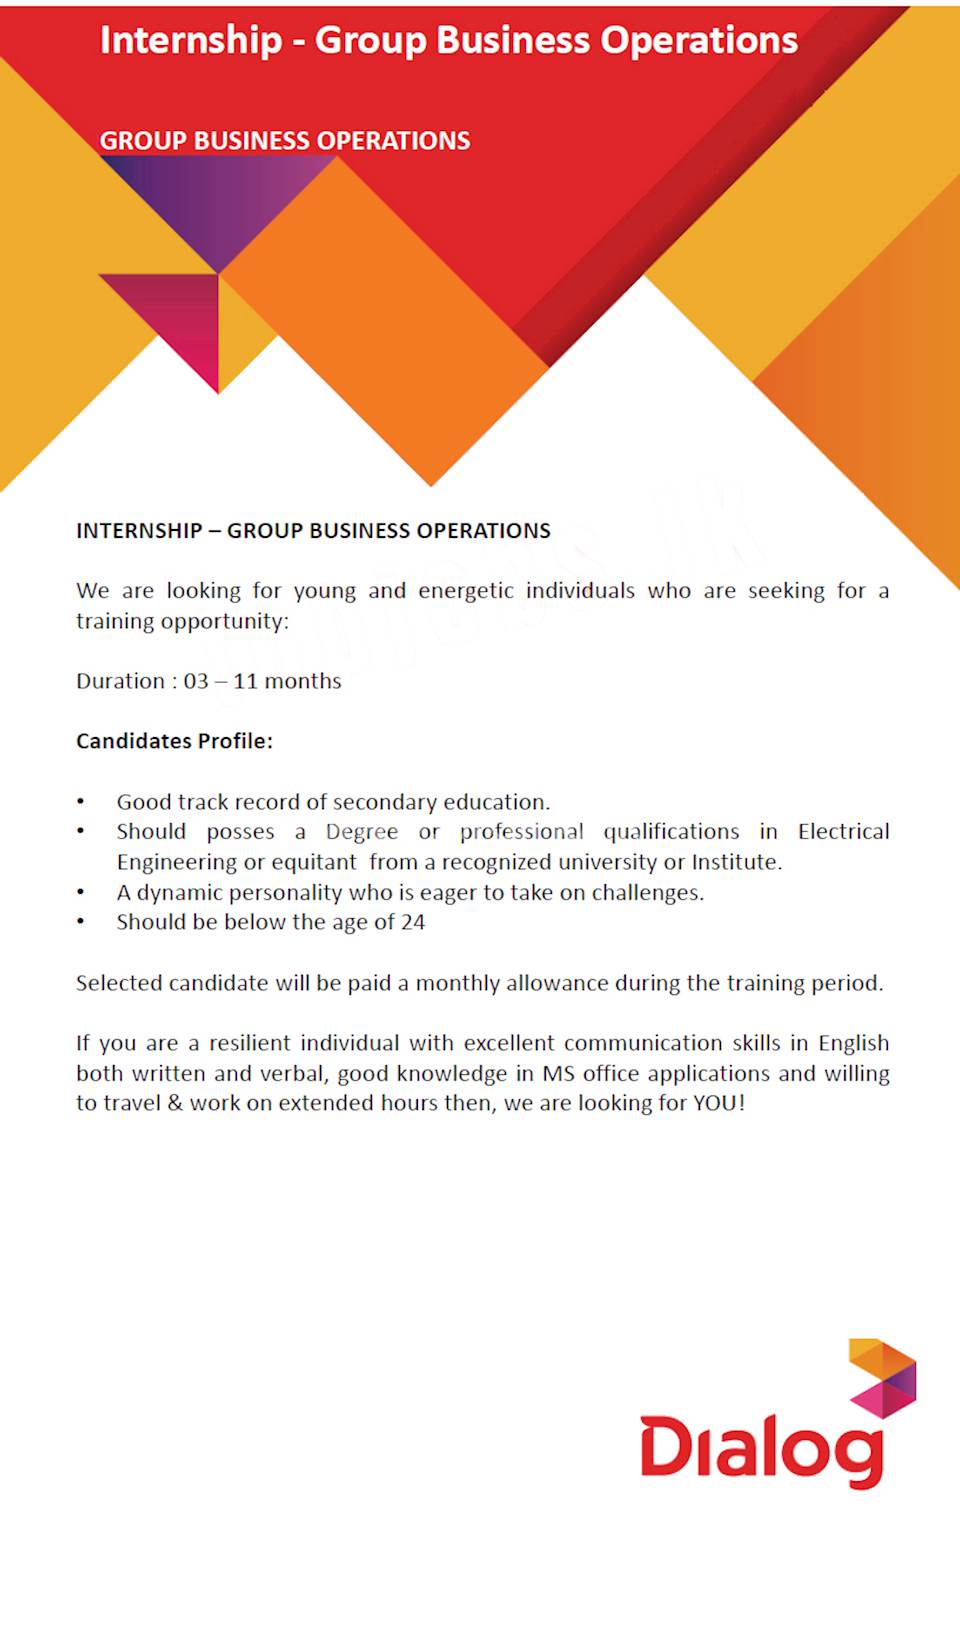 Internship - Group Business Operations